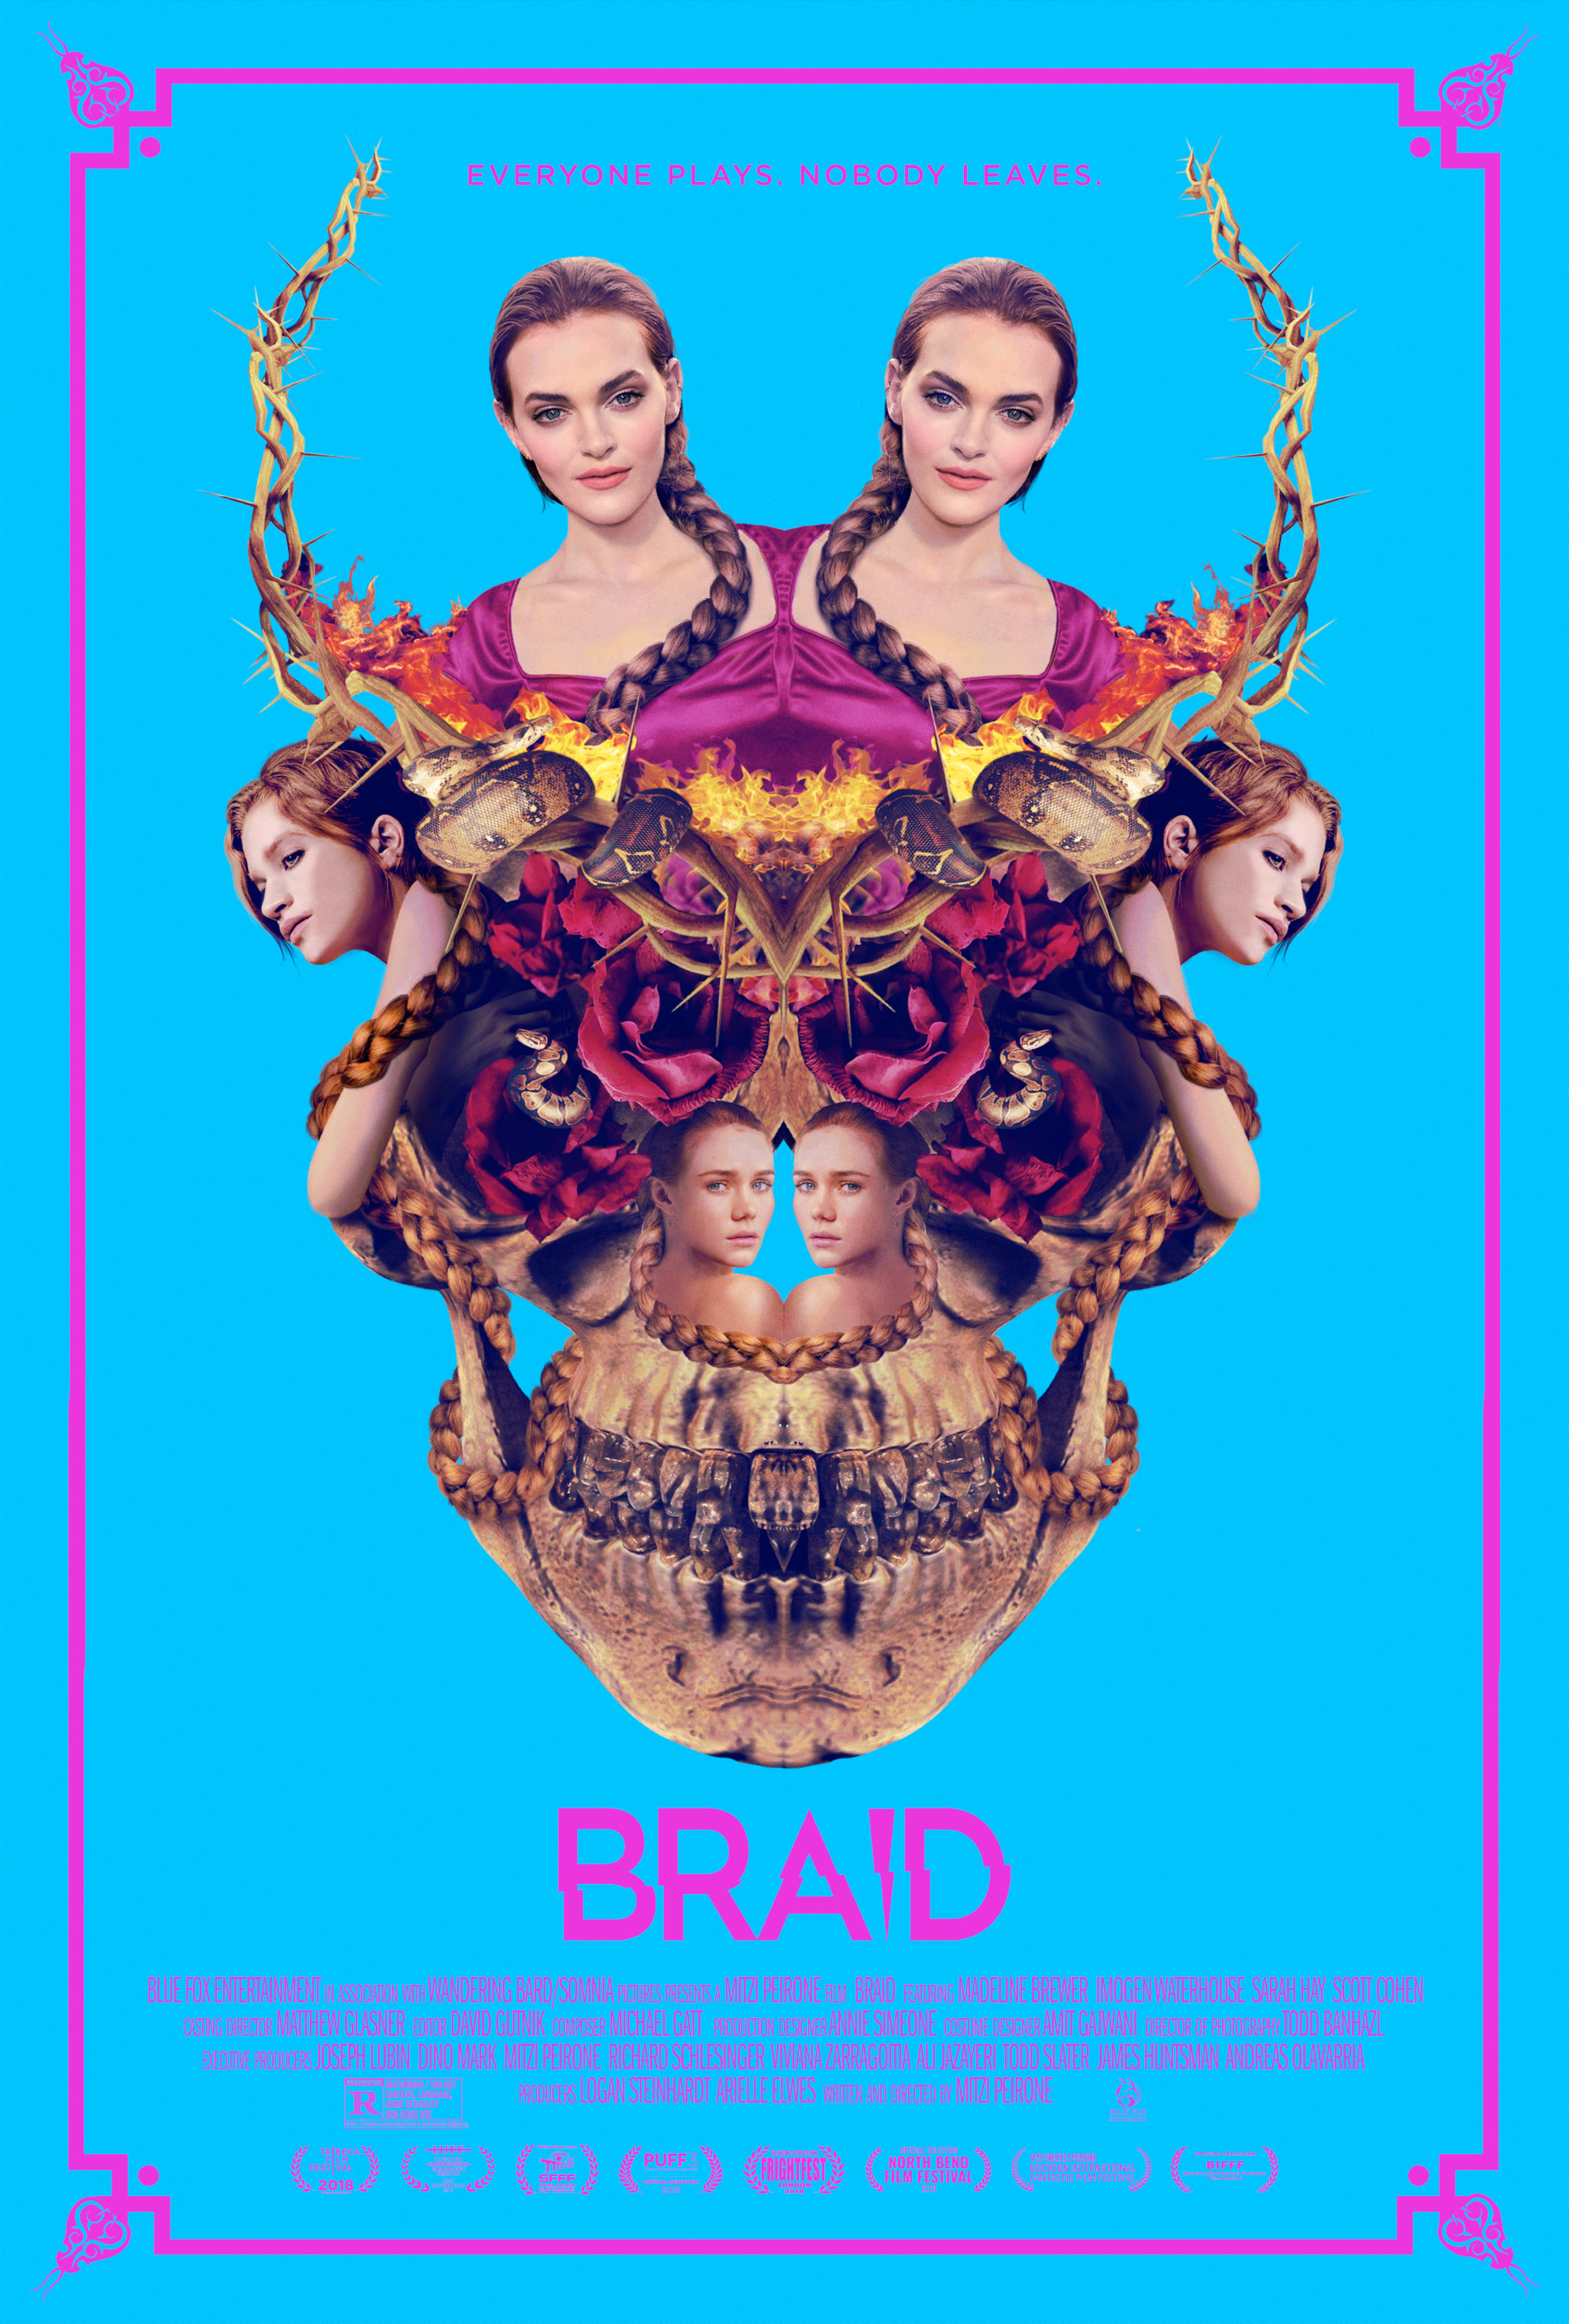 Mega Sized Movie Poster Image for Braid 